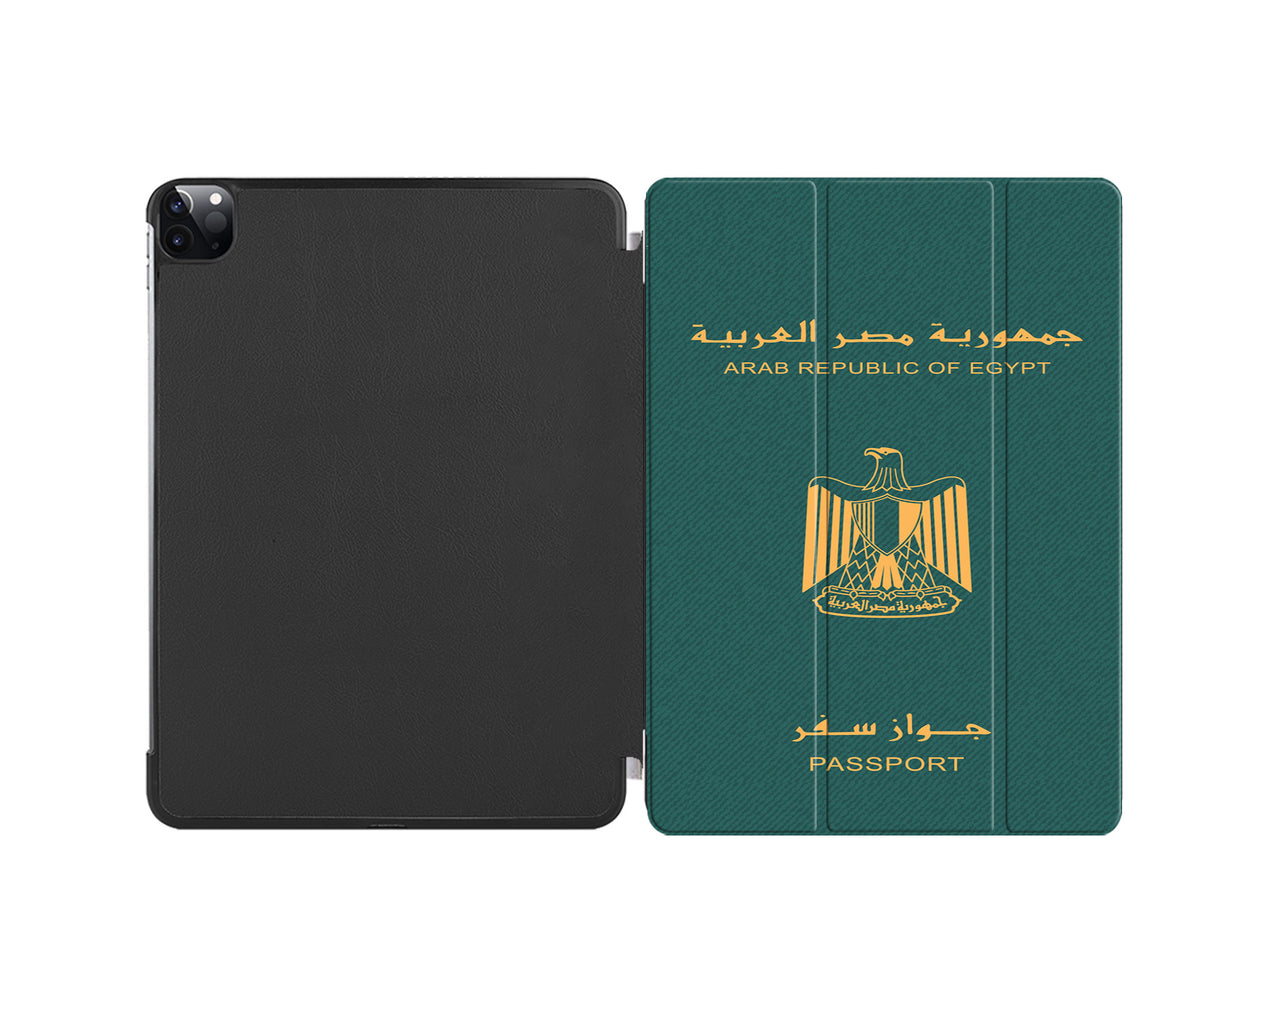 Egypt Passport Designed iPad Cases